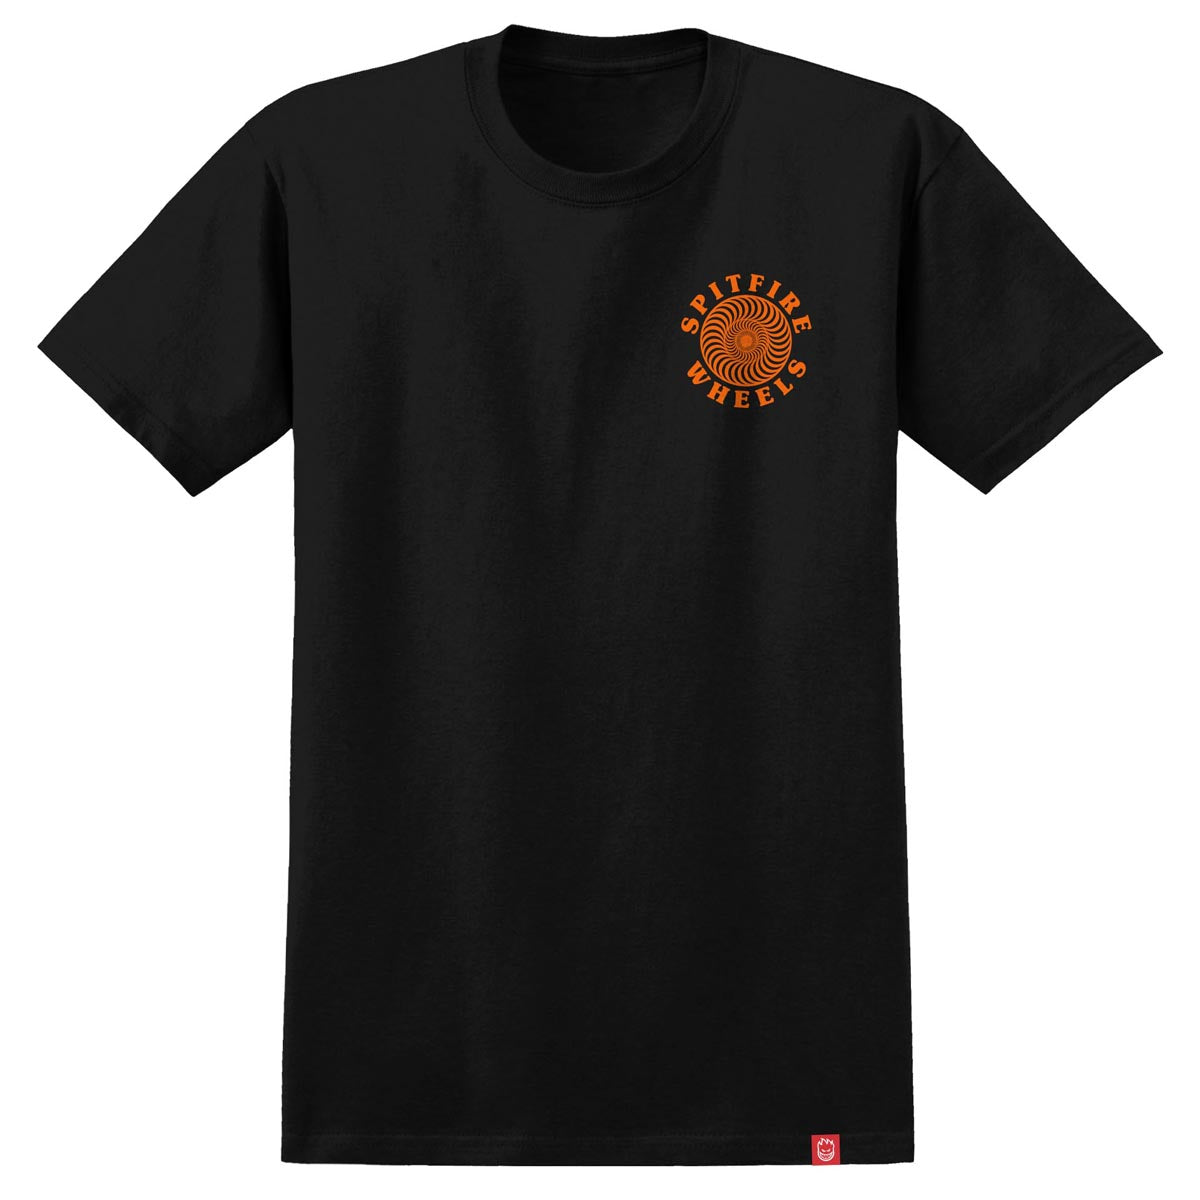 Spitfire Og Classic Fill T-Shirt - Black/Orange/White image 2